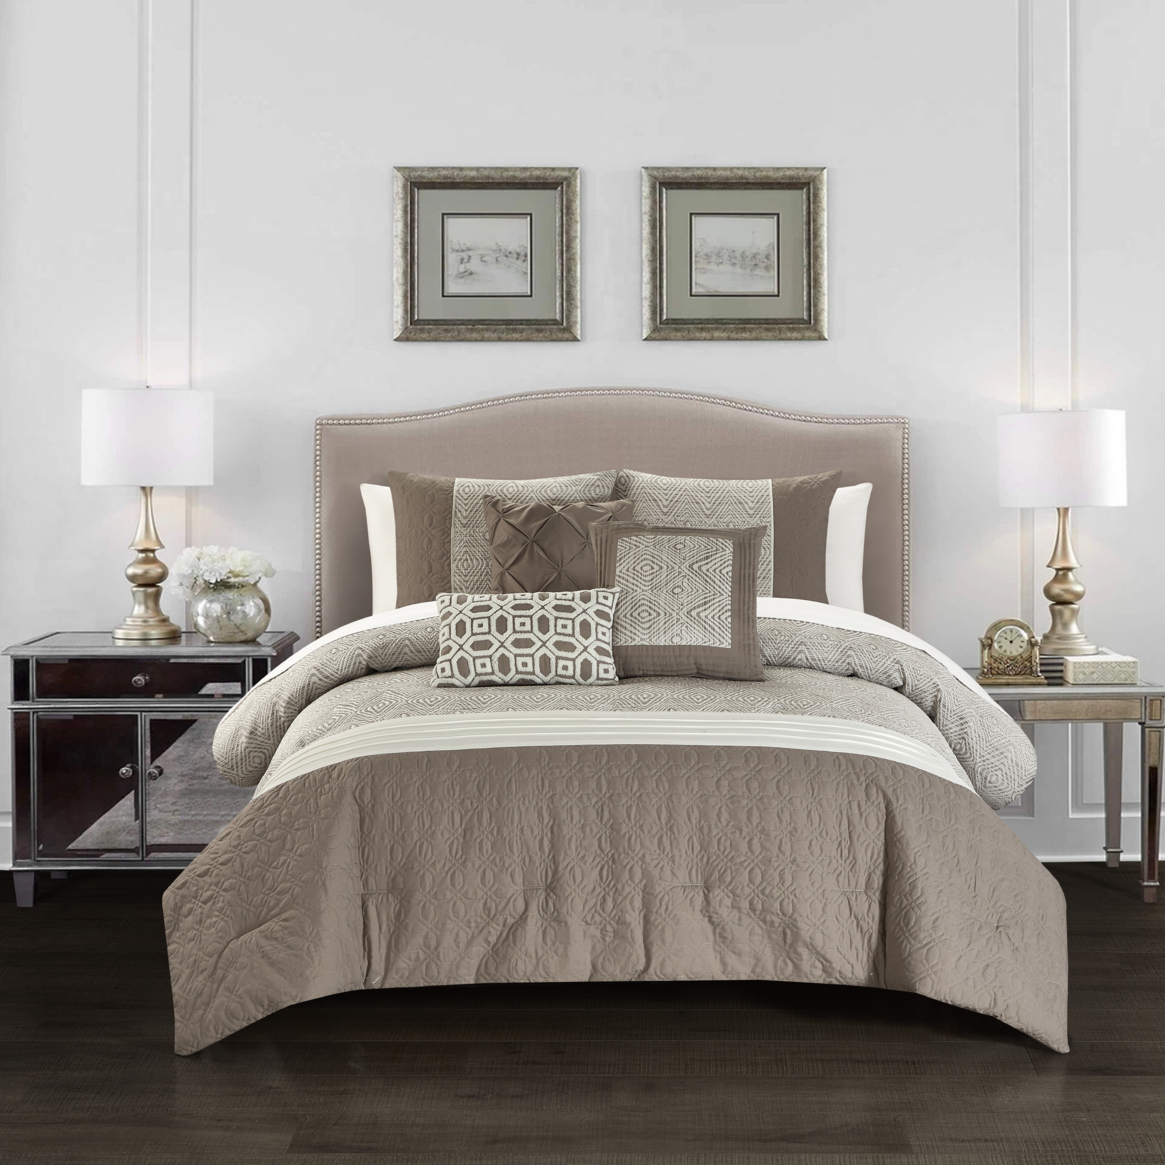 Malda 6 Piece Comforter Set Jacquard Geometric Diamond Pattern Color Block Design Bedding - beige, queen